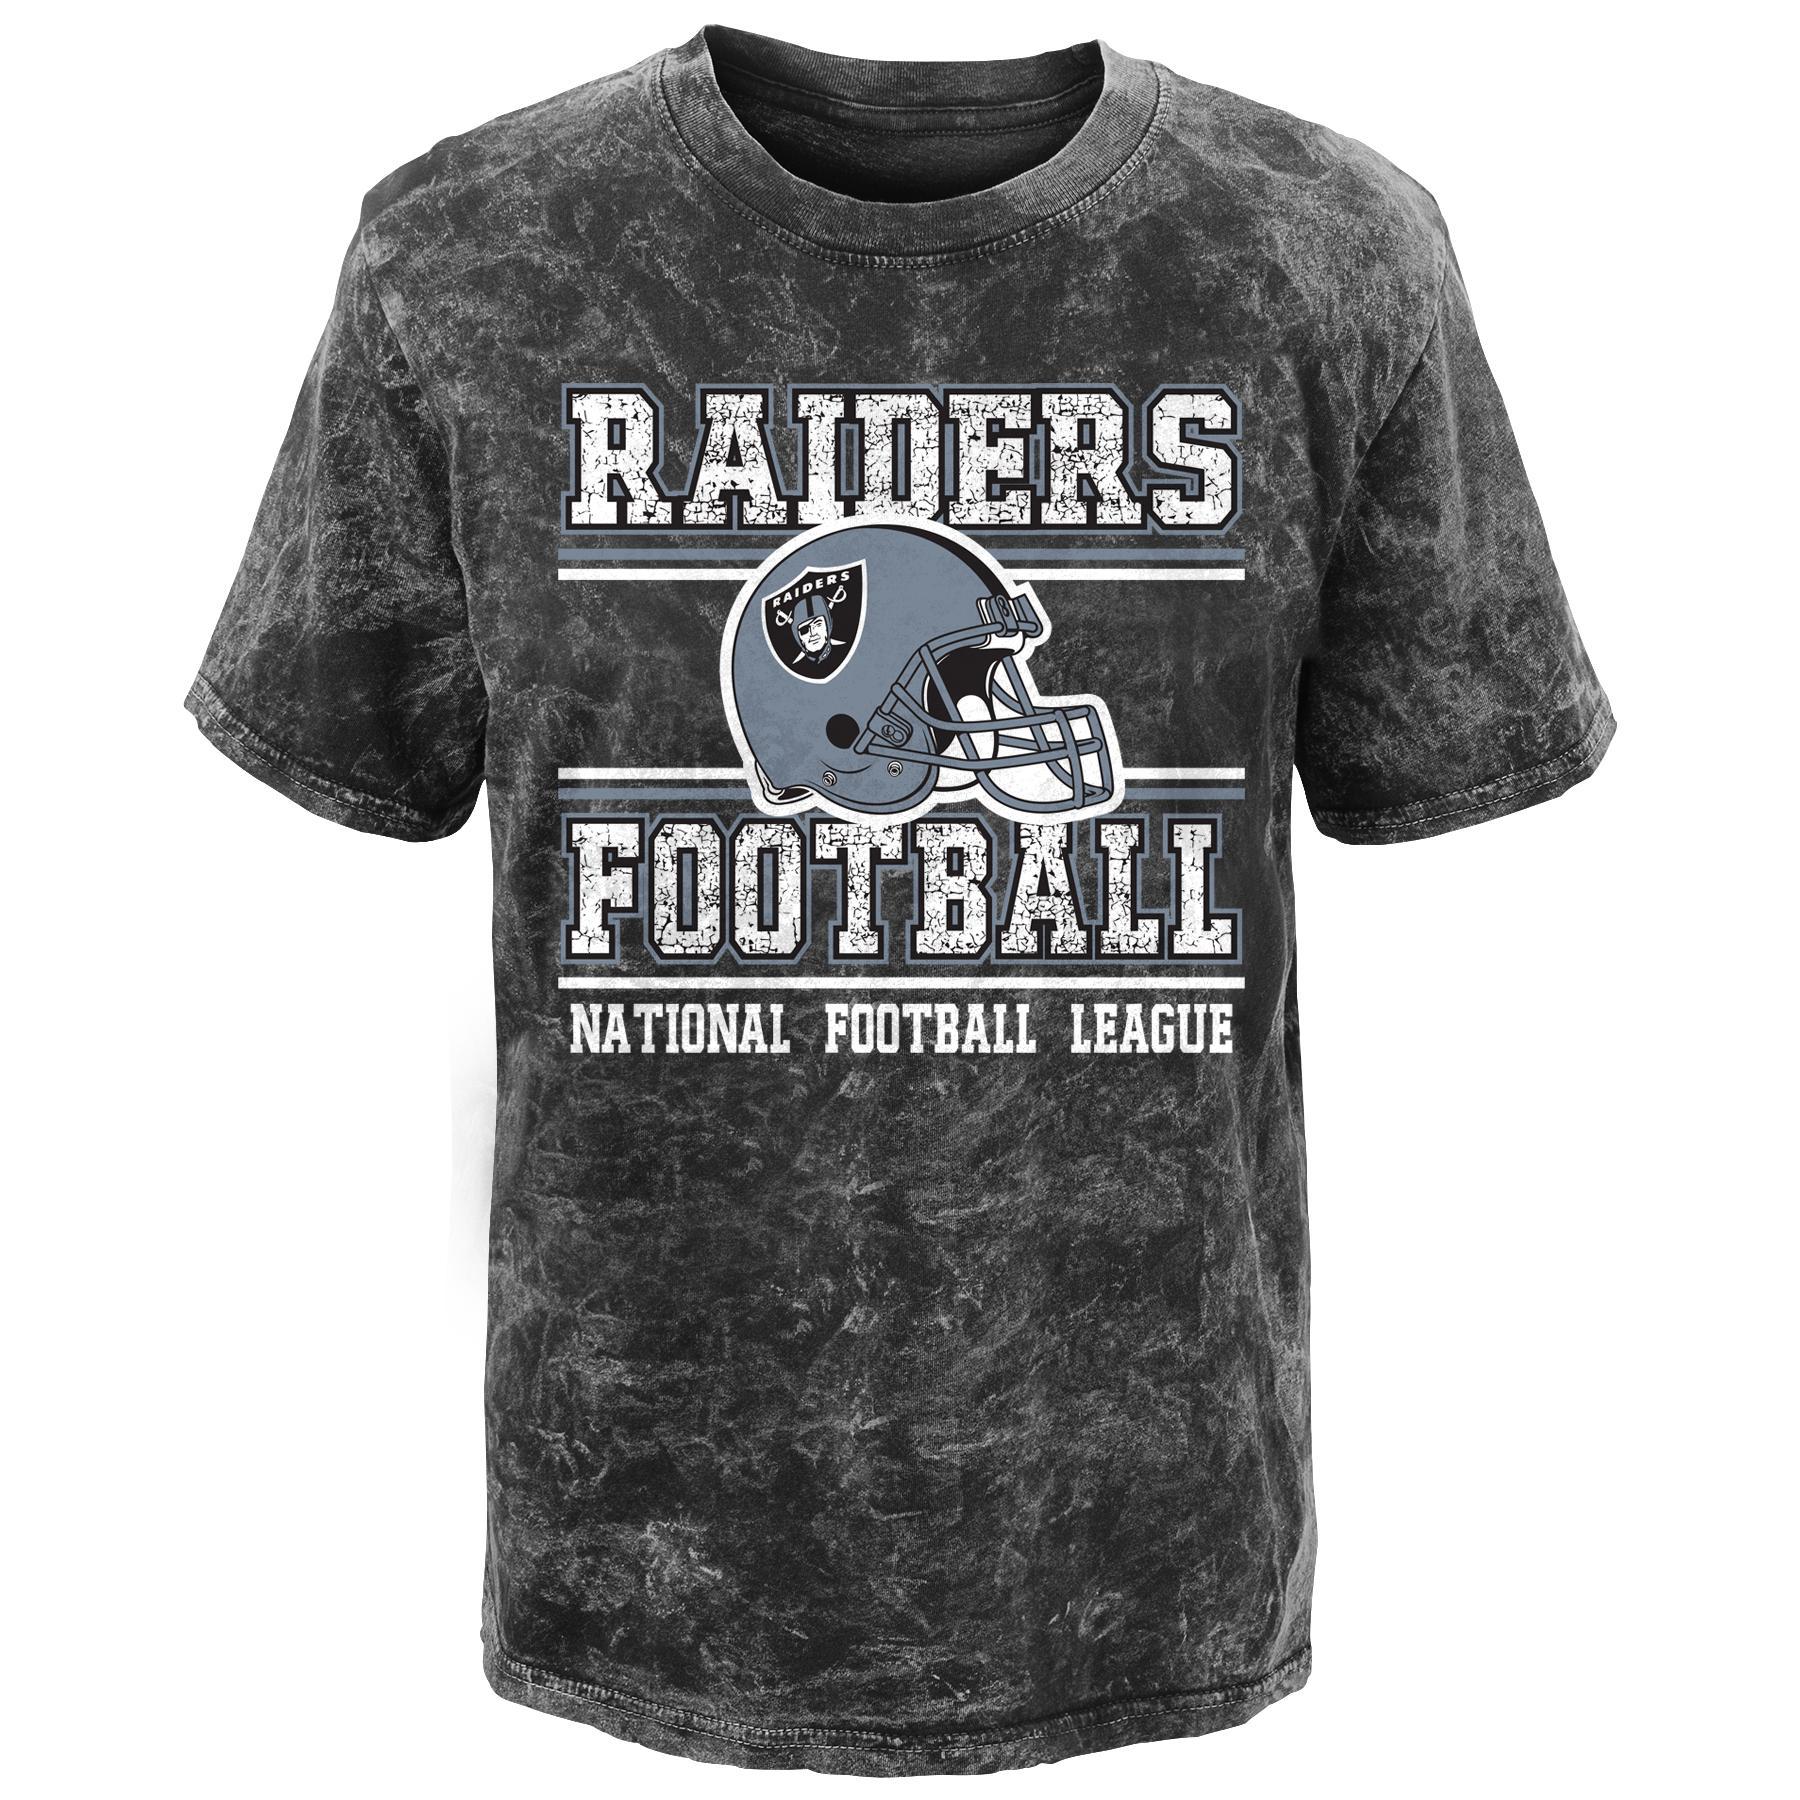 NFL Boys' Graphic T-Shirt - Oakland Raiders